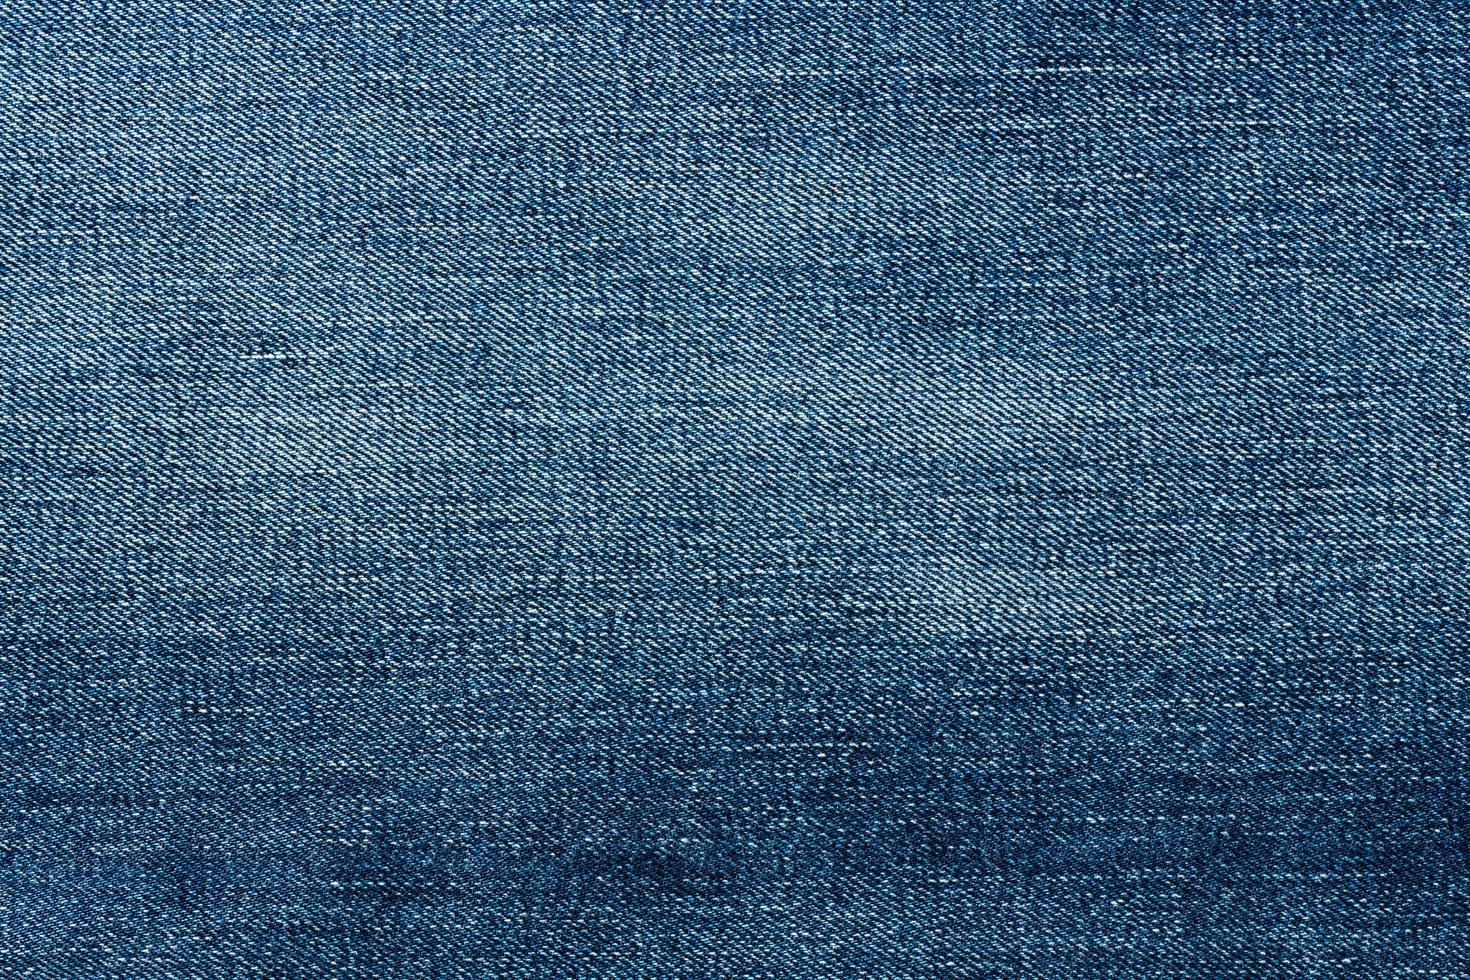 Blue denim jean texture photo